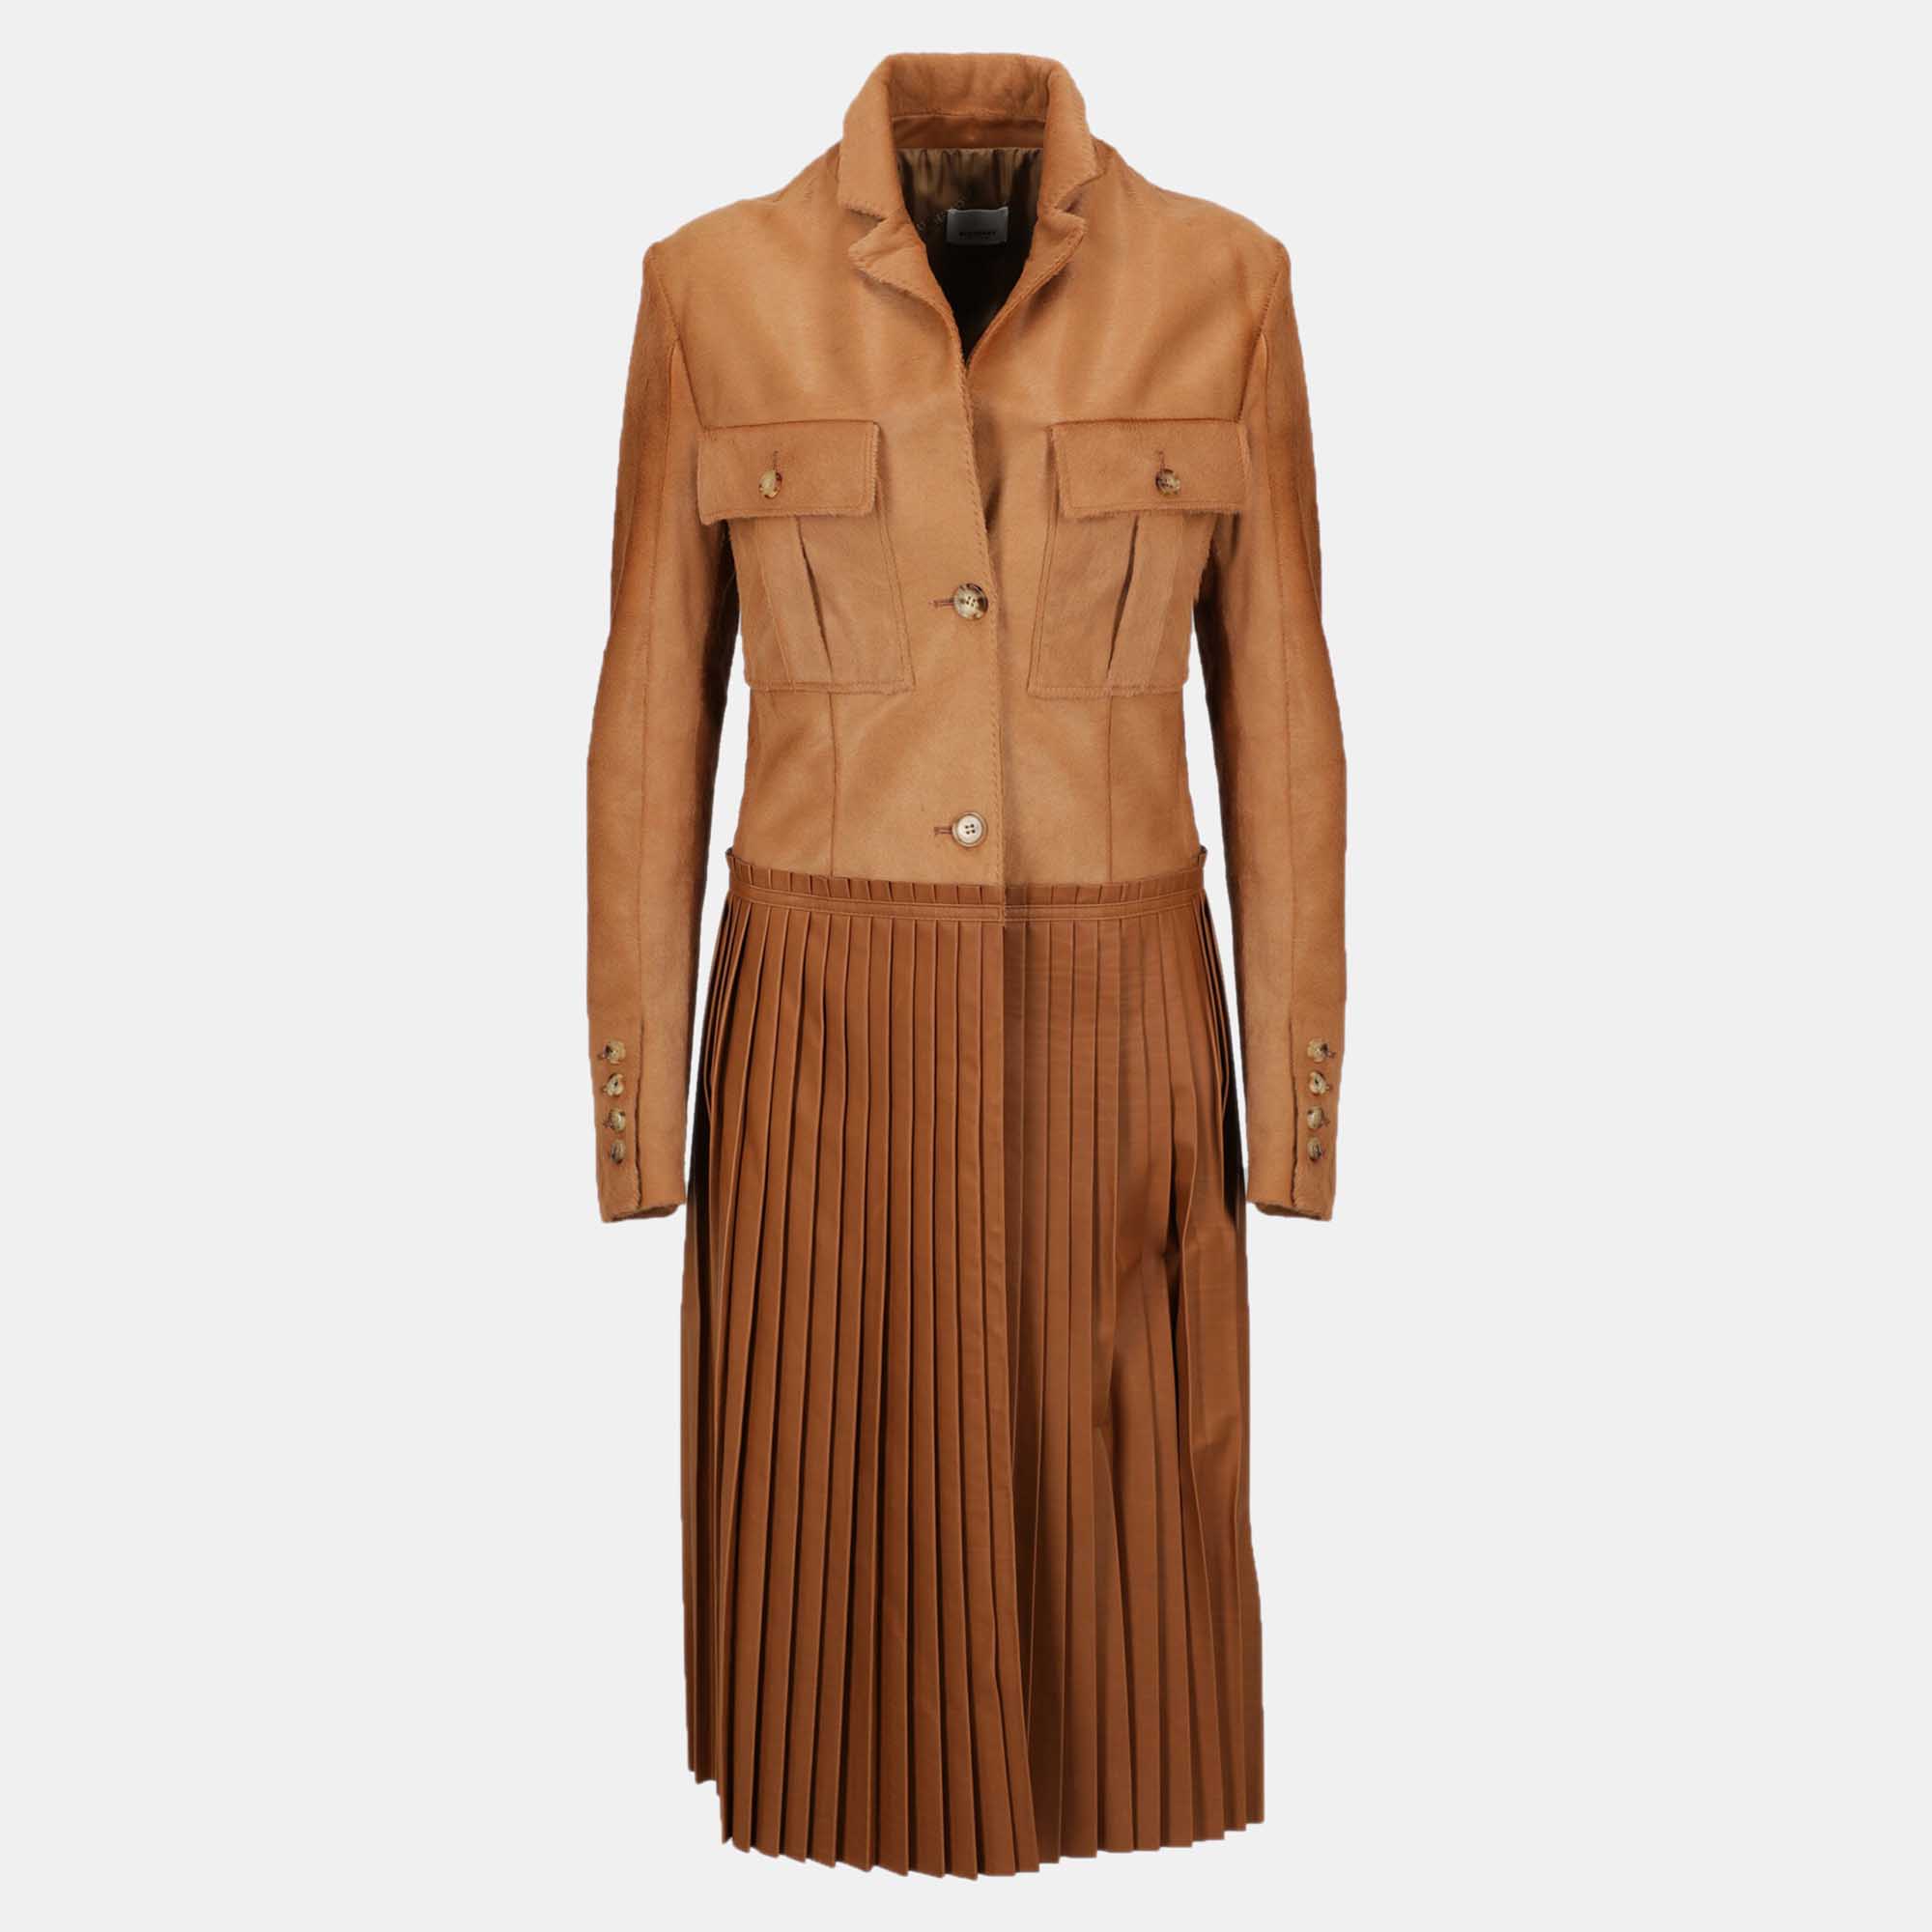 Burberry  Women's Leather Coat - Camel Color - XS